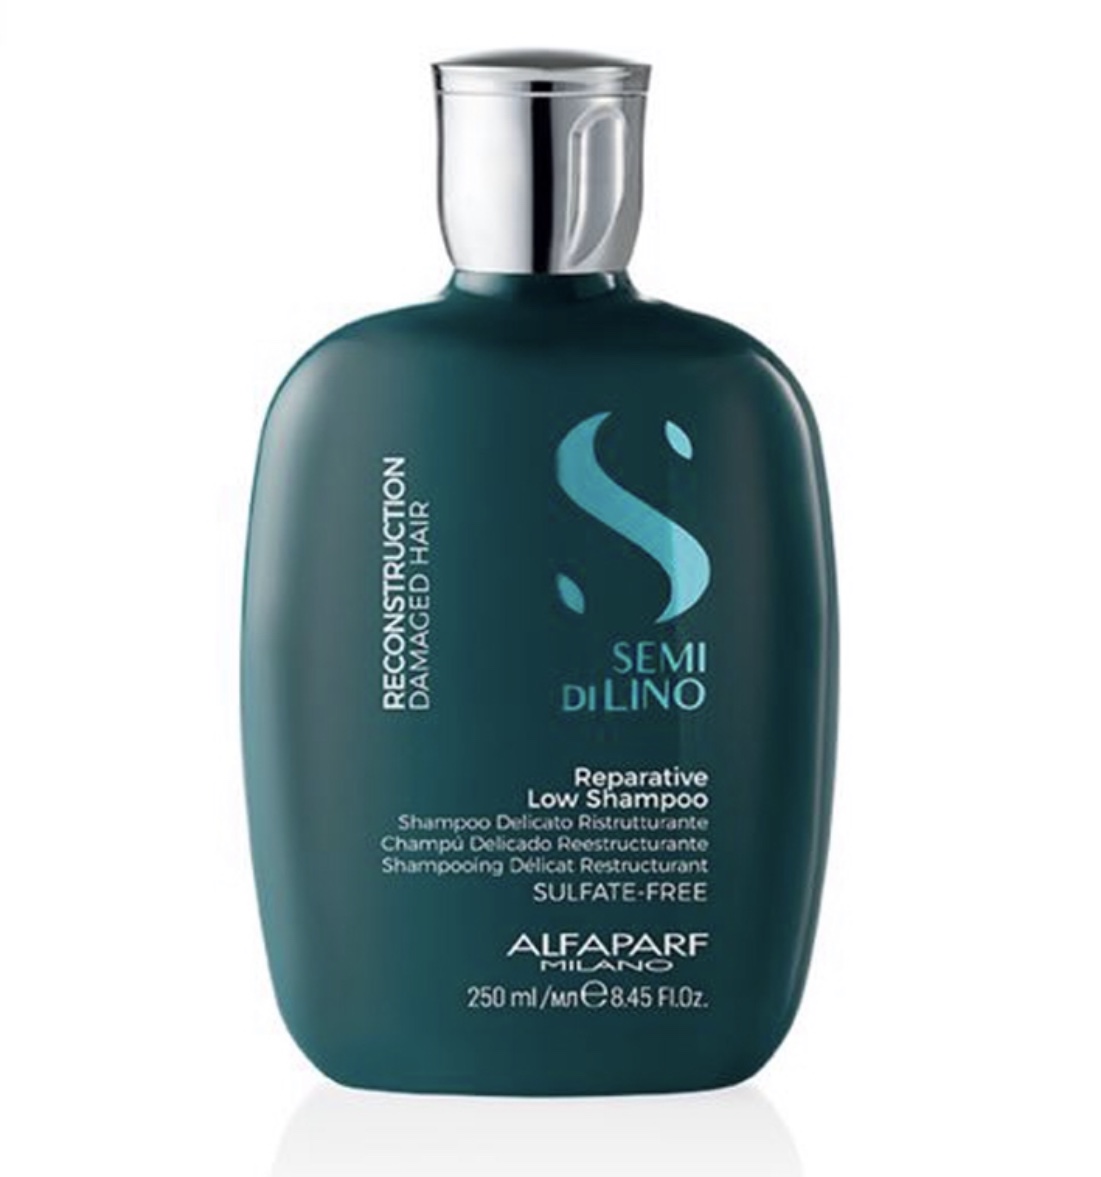  Alfaparf Reparative Low Shampoo Brenda Beauty Supply